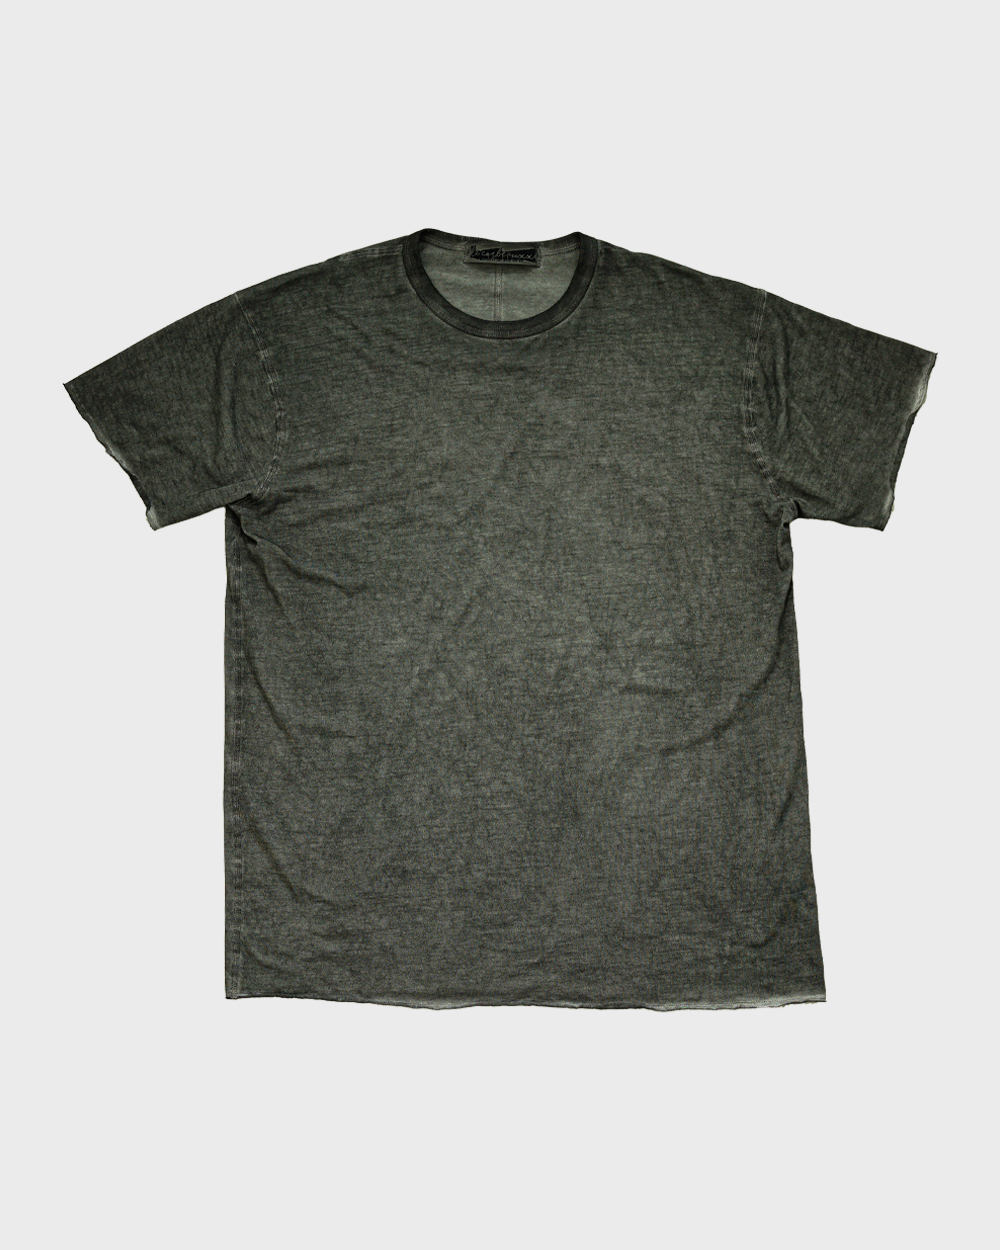 Carbon T-shirts (Black)